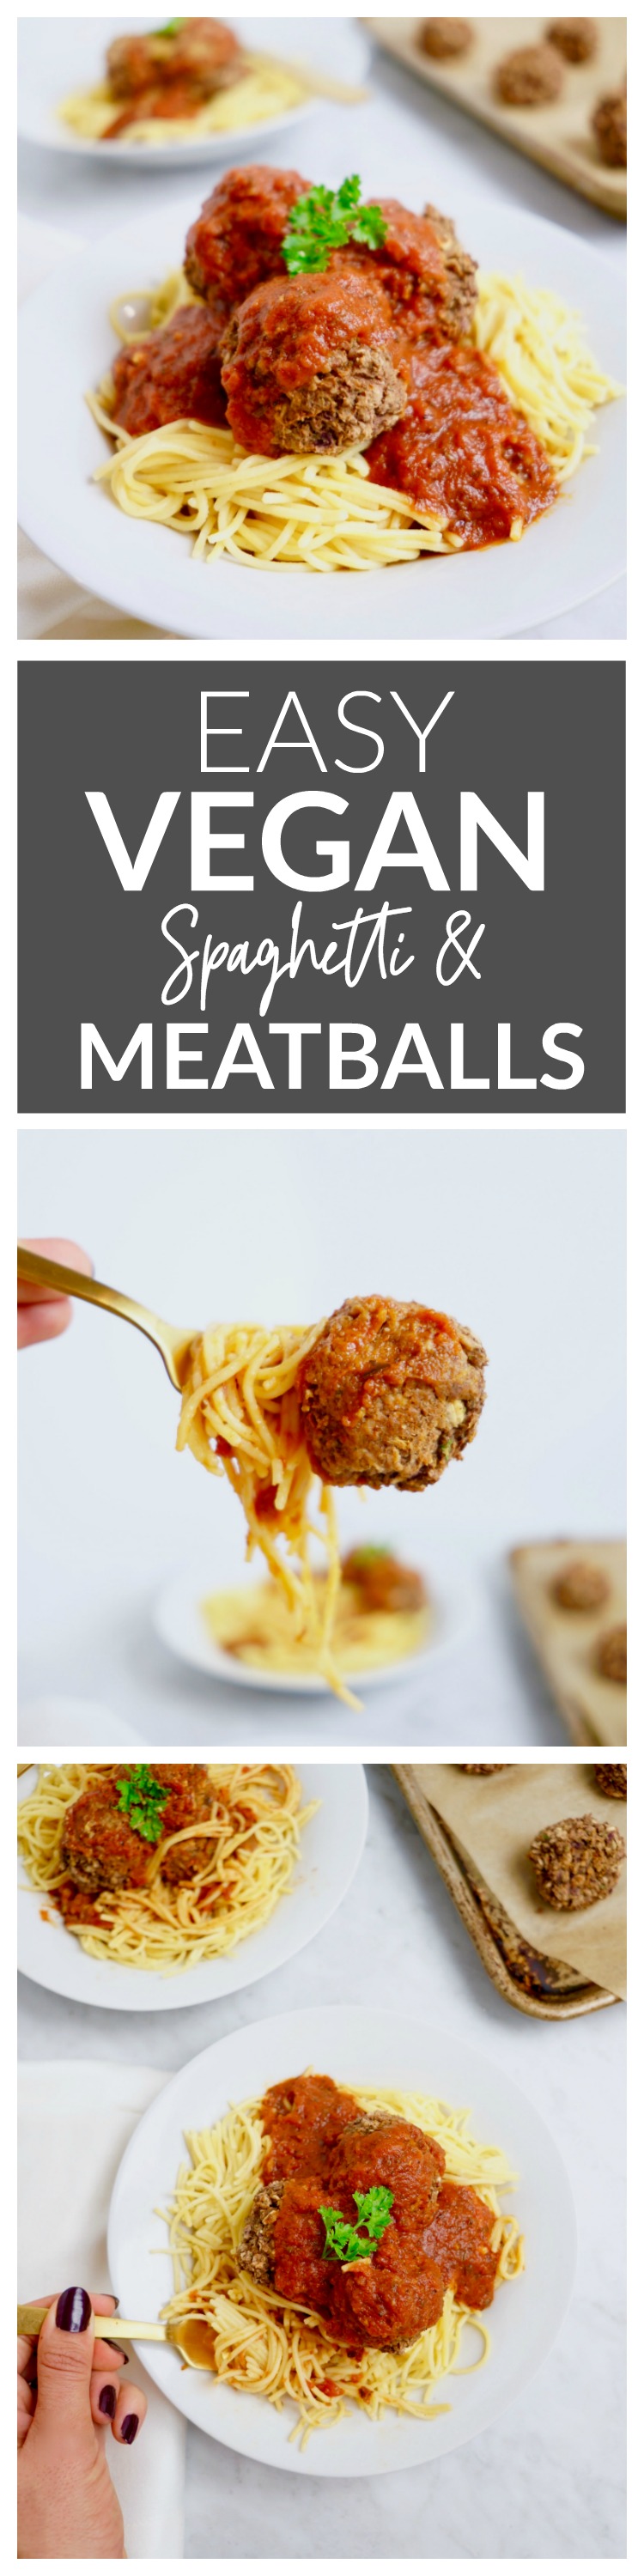 Easy Vegan Meatballs + Spaghetti